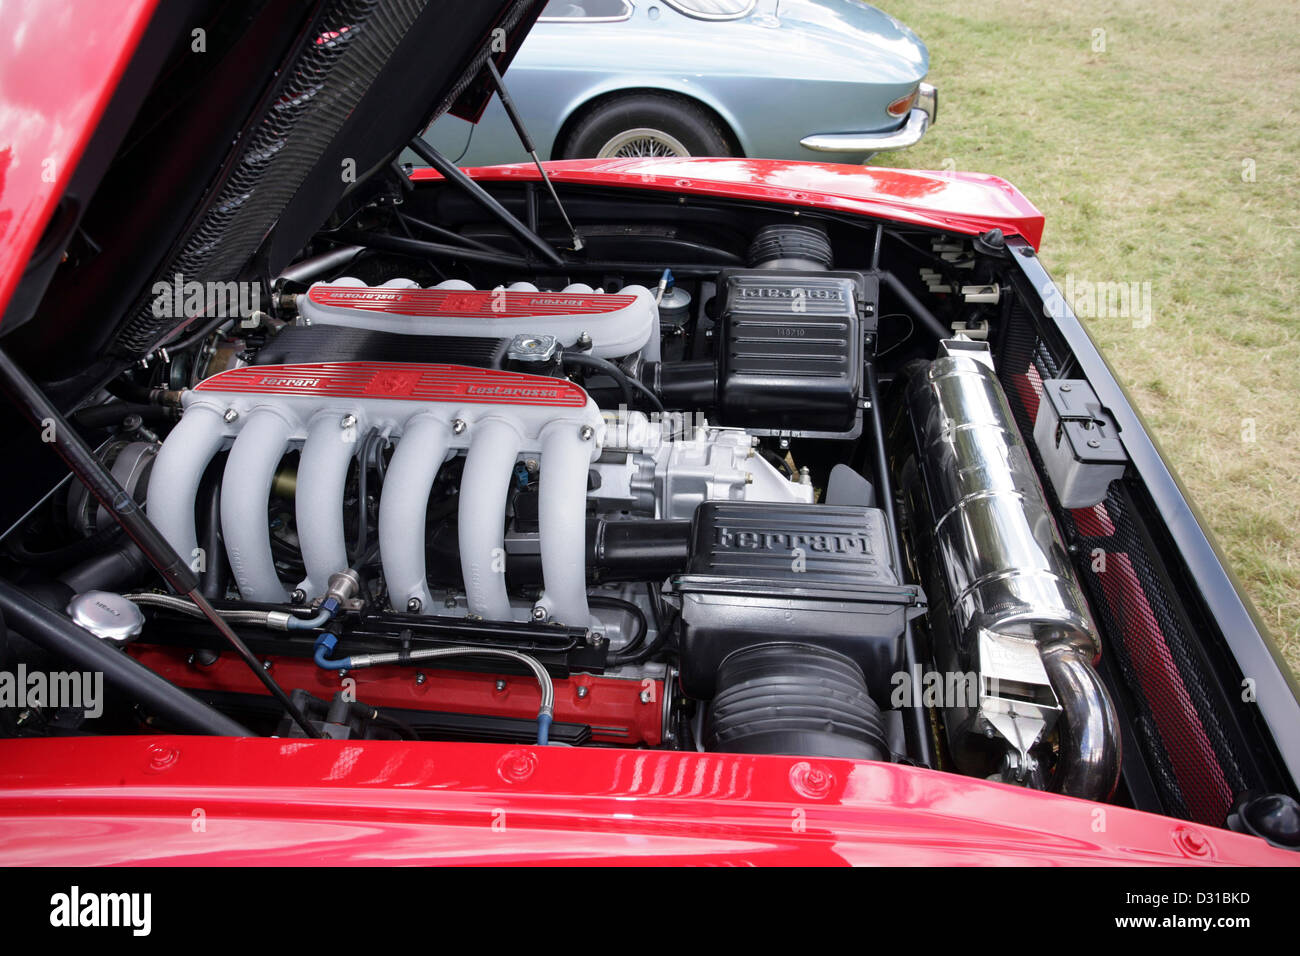 Ferrari v12 engine hi-res stock photography and images - Alamy